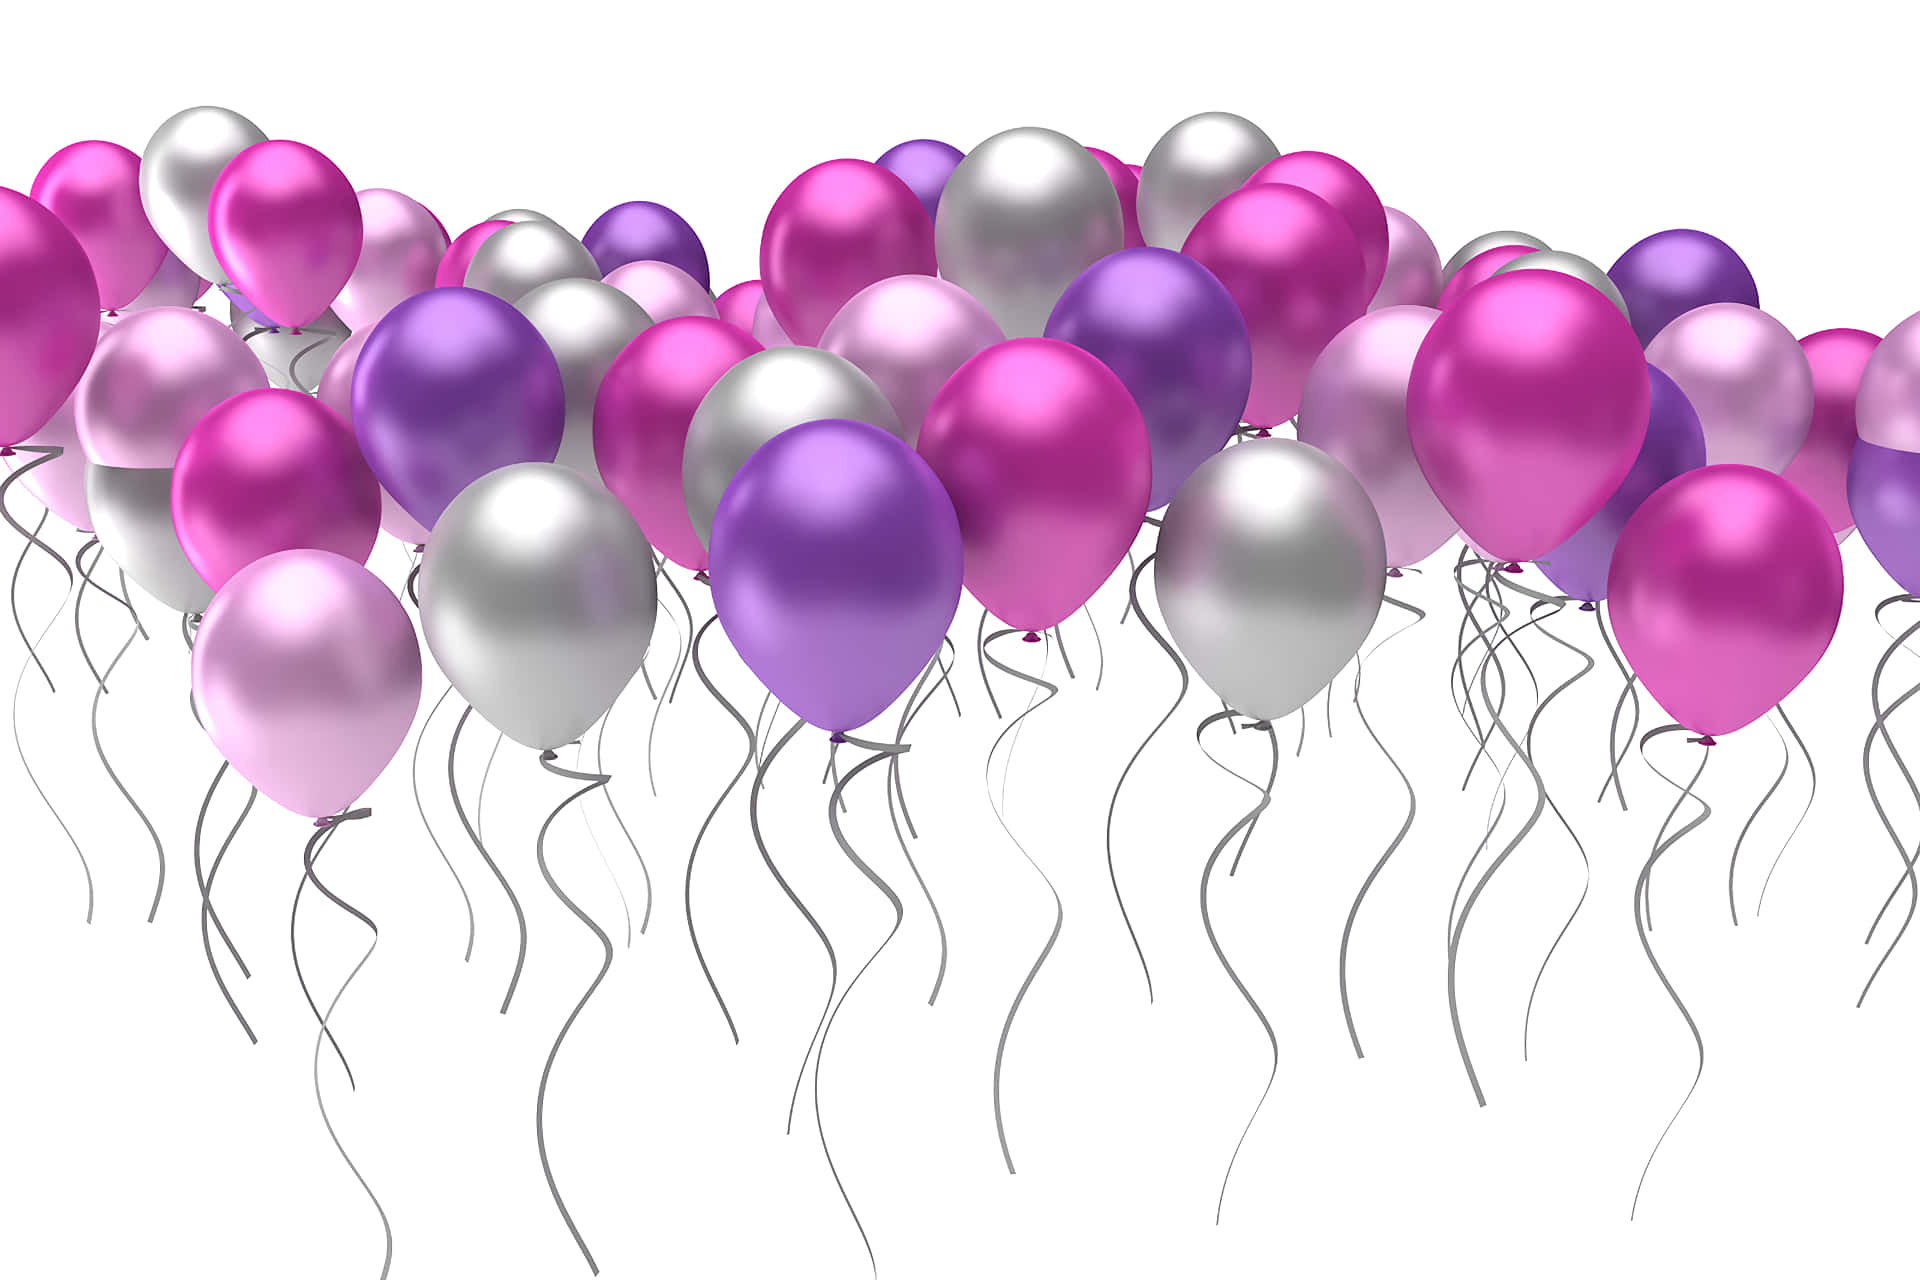 Vibrant Birthday Balloons Floating Joyfully